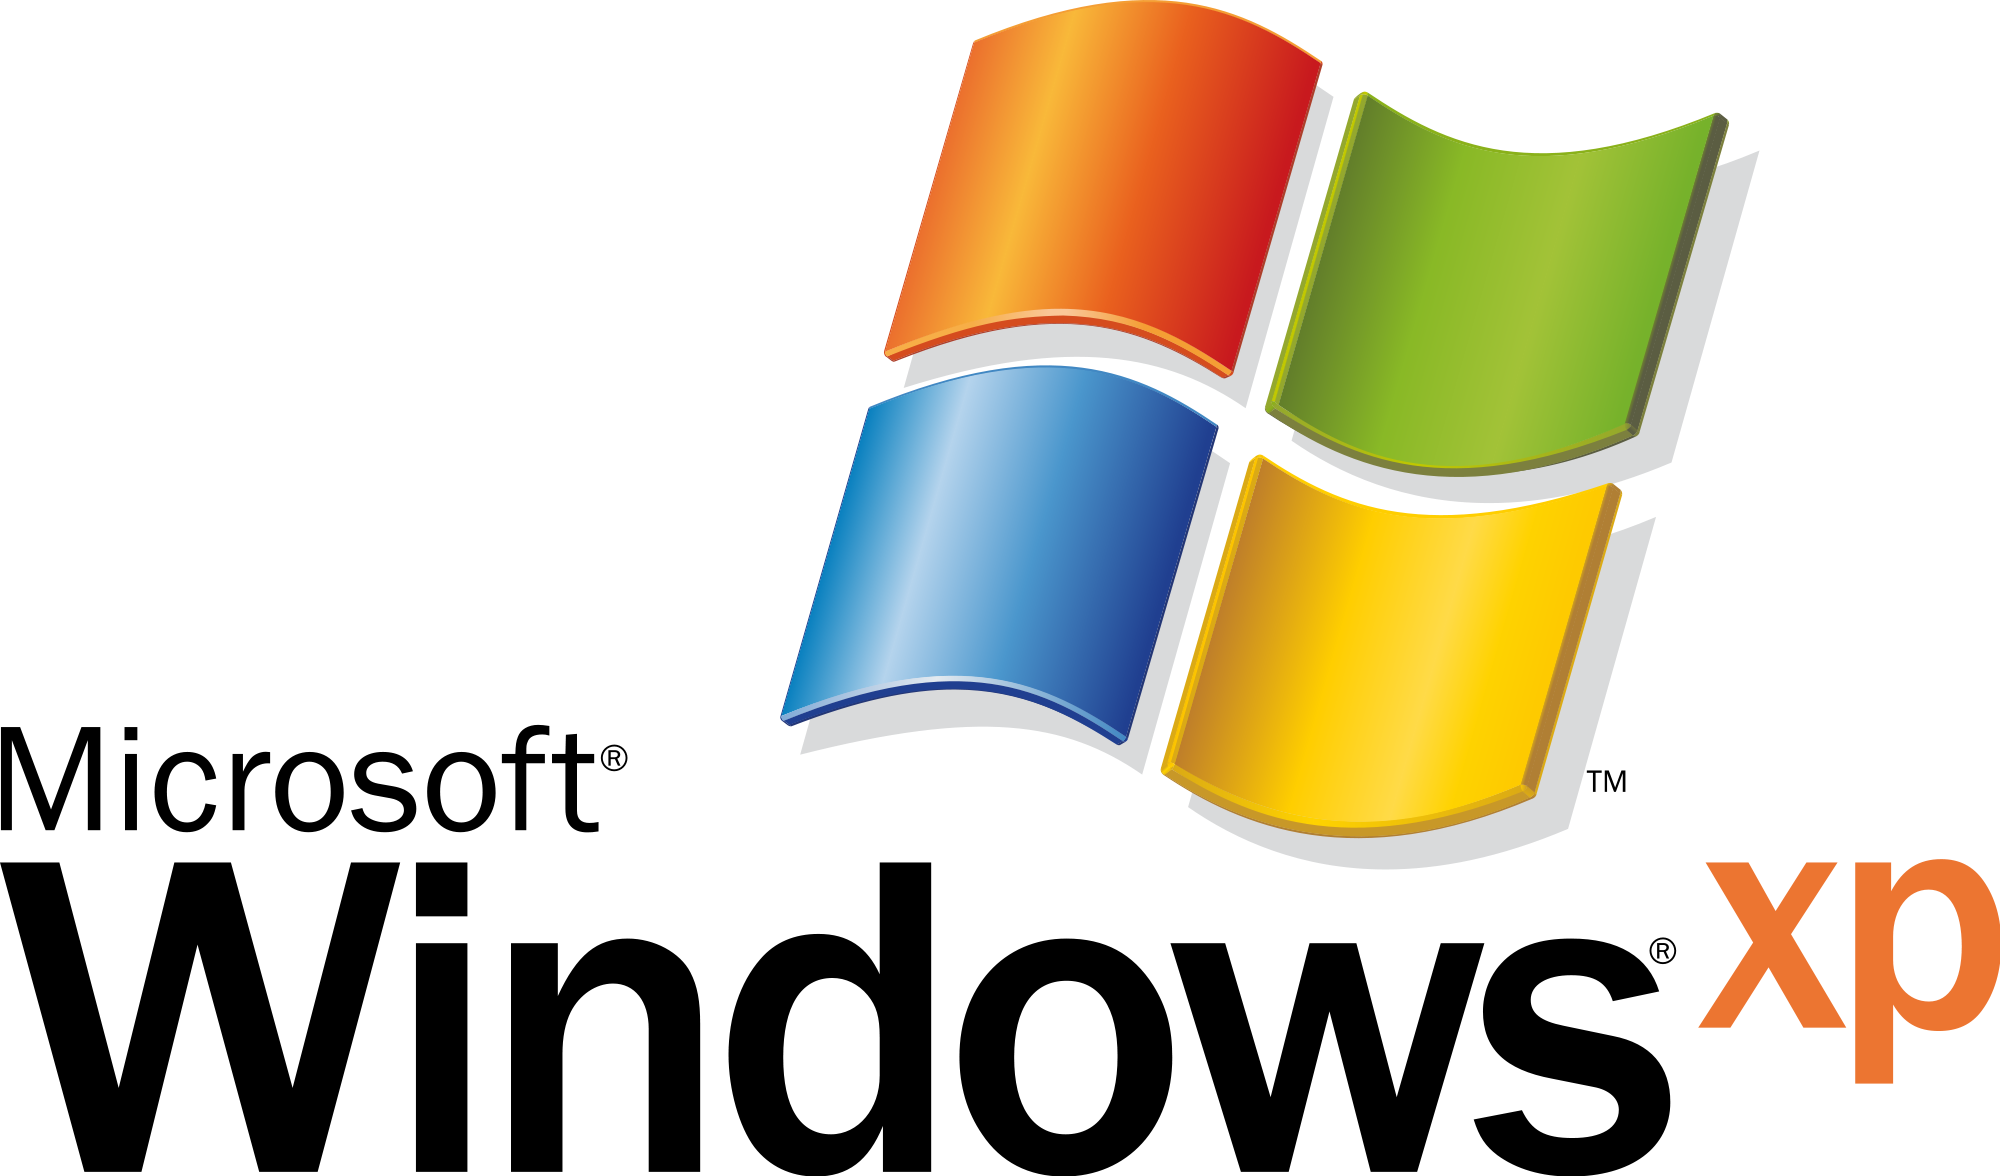 Image - Windows XP logo.png | Logopedia | Fandom powered by Wikia